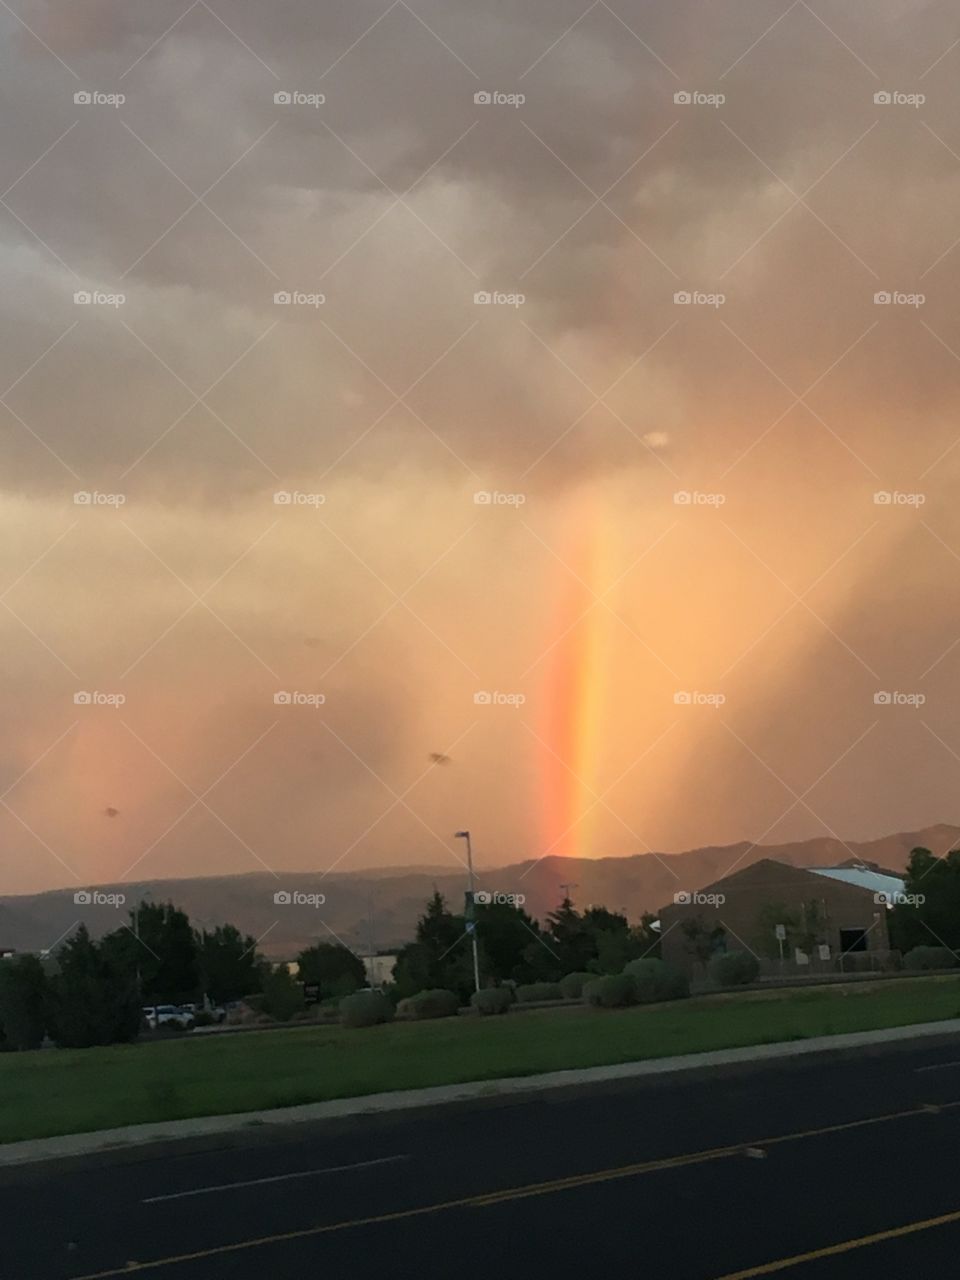 Rainbow 
Light
Sky
View 
Field
